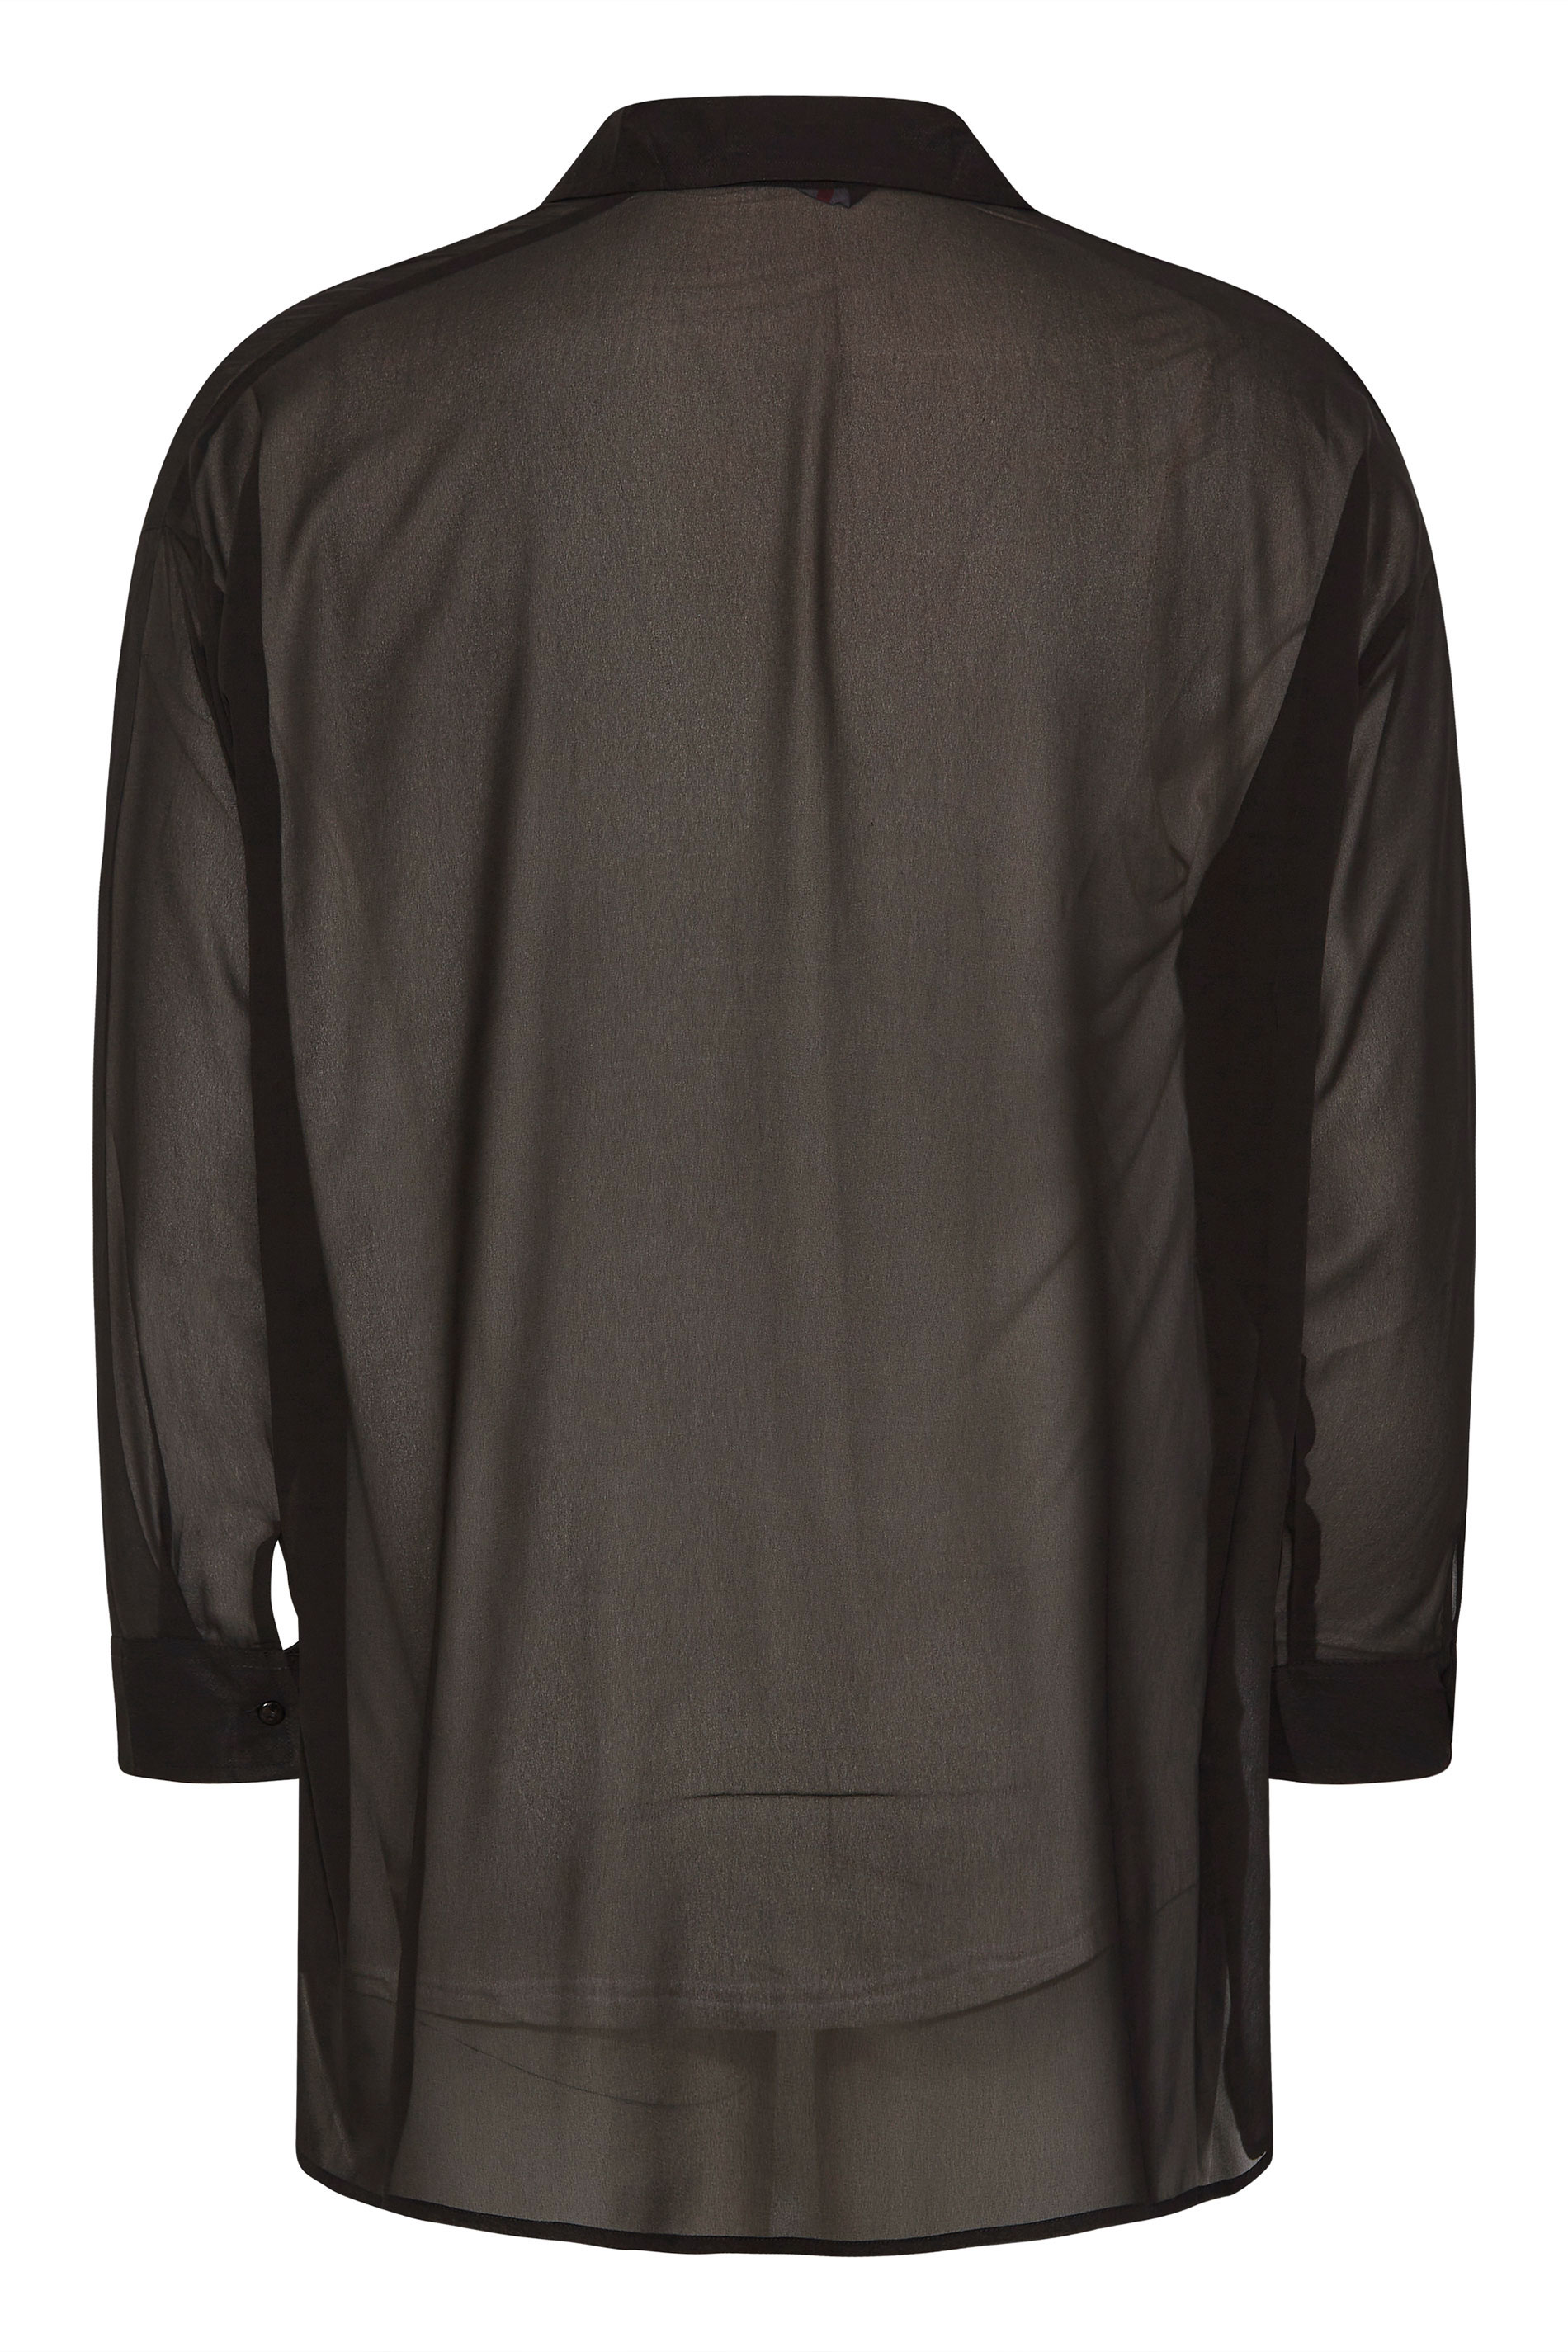 Plus Size Black Sheer Beach Shirt | Yours Clothing